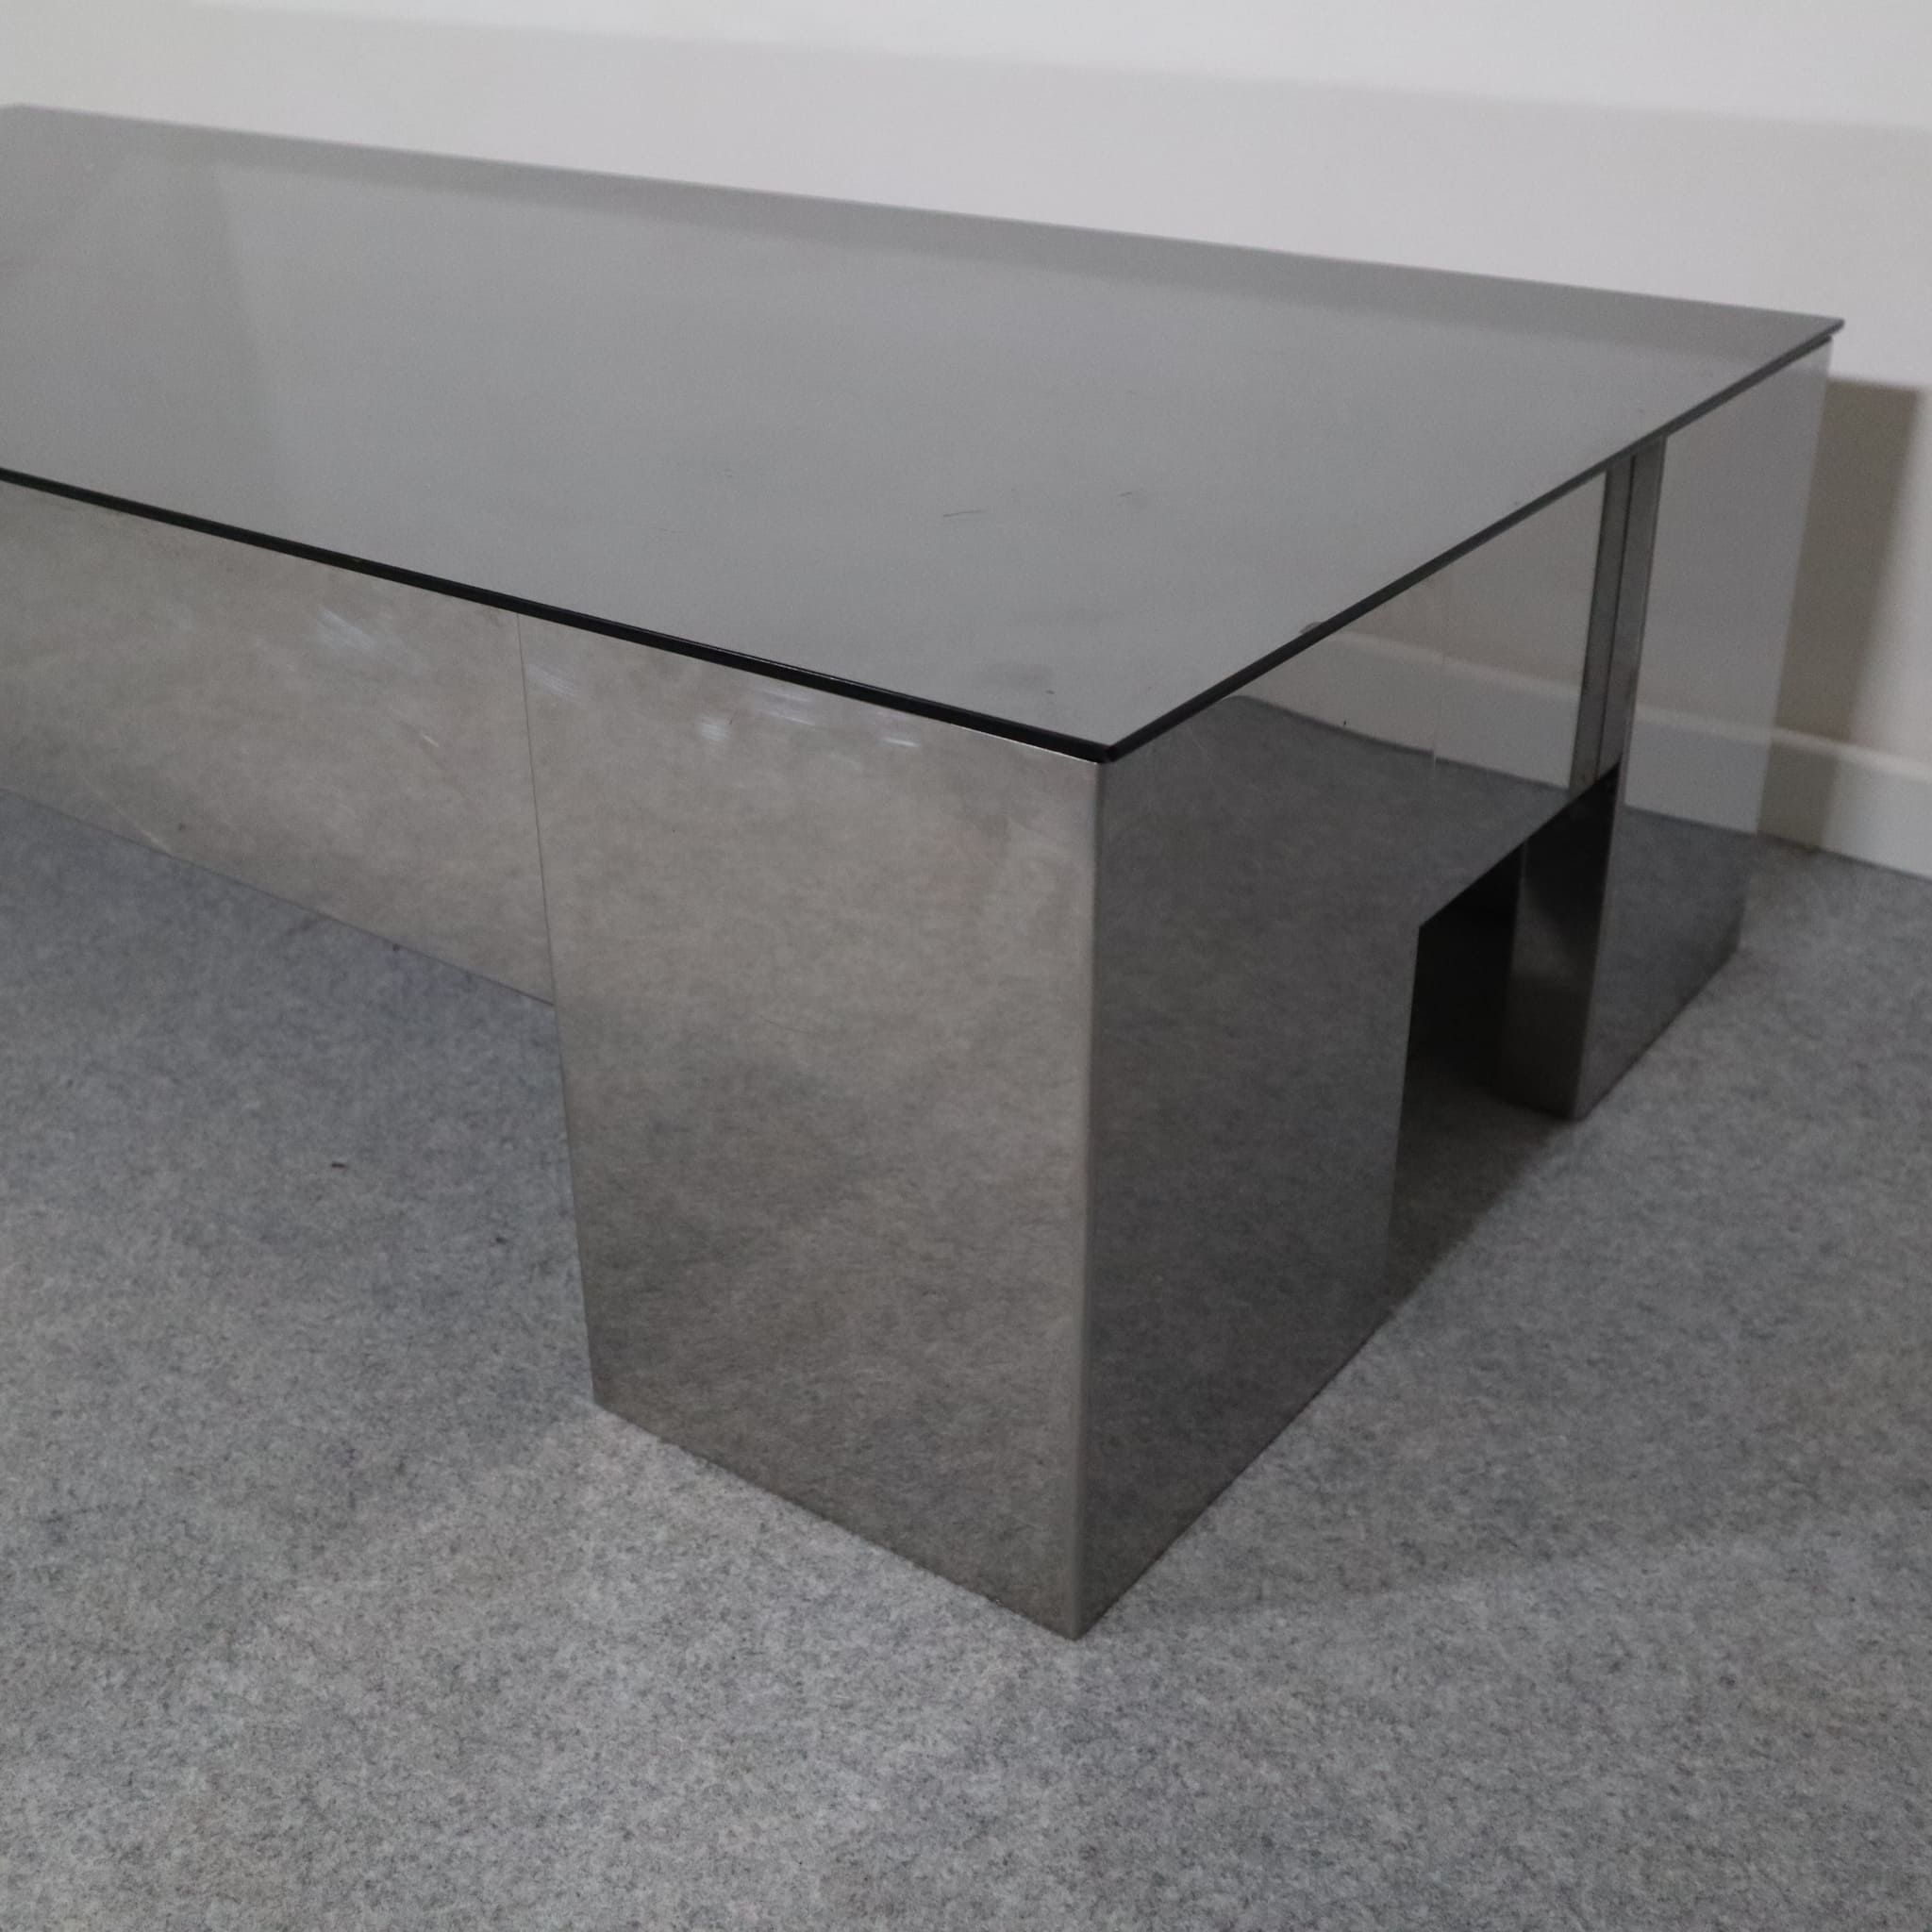 visioni-visionidepoca-depoca-coffee table-steel-smoked-mirror-70s-made-italy-furniture-design-modern-vintage-5